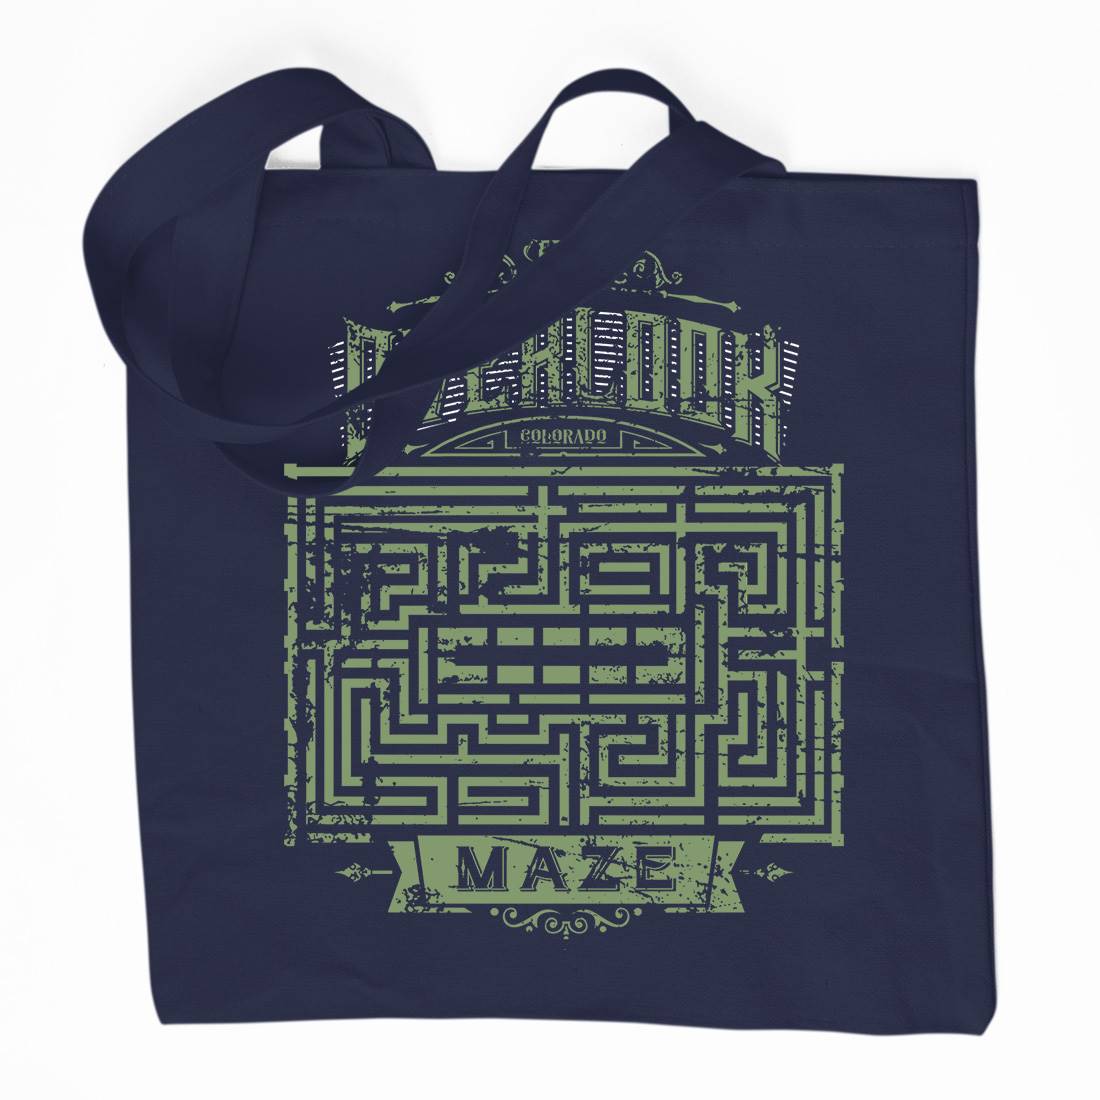 Overlook Maze Organic Premium Cotton Tote Bag Horror D413